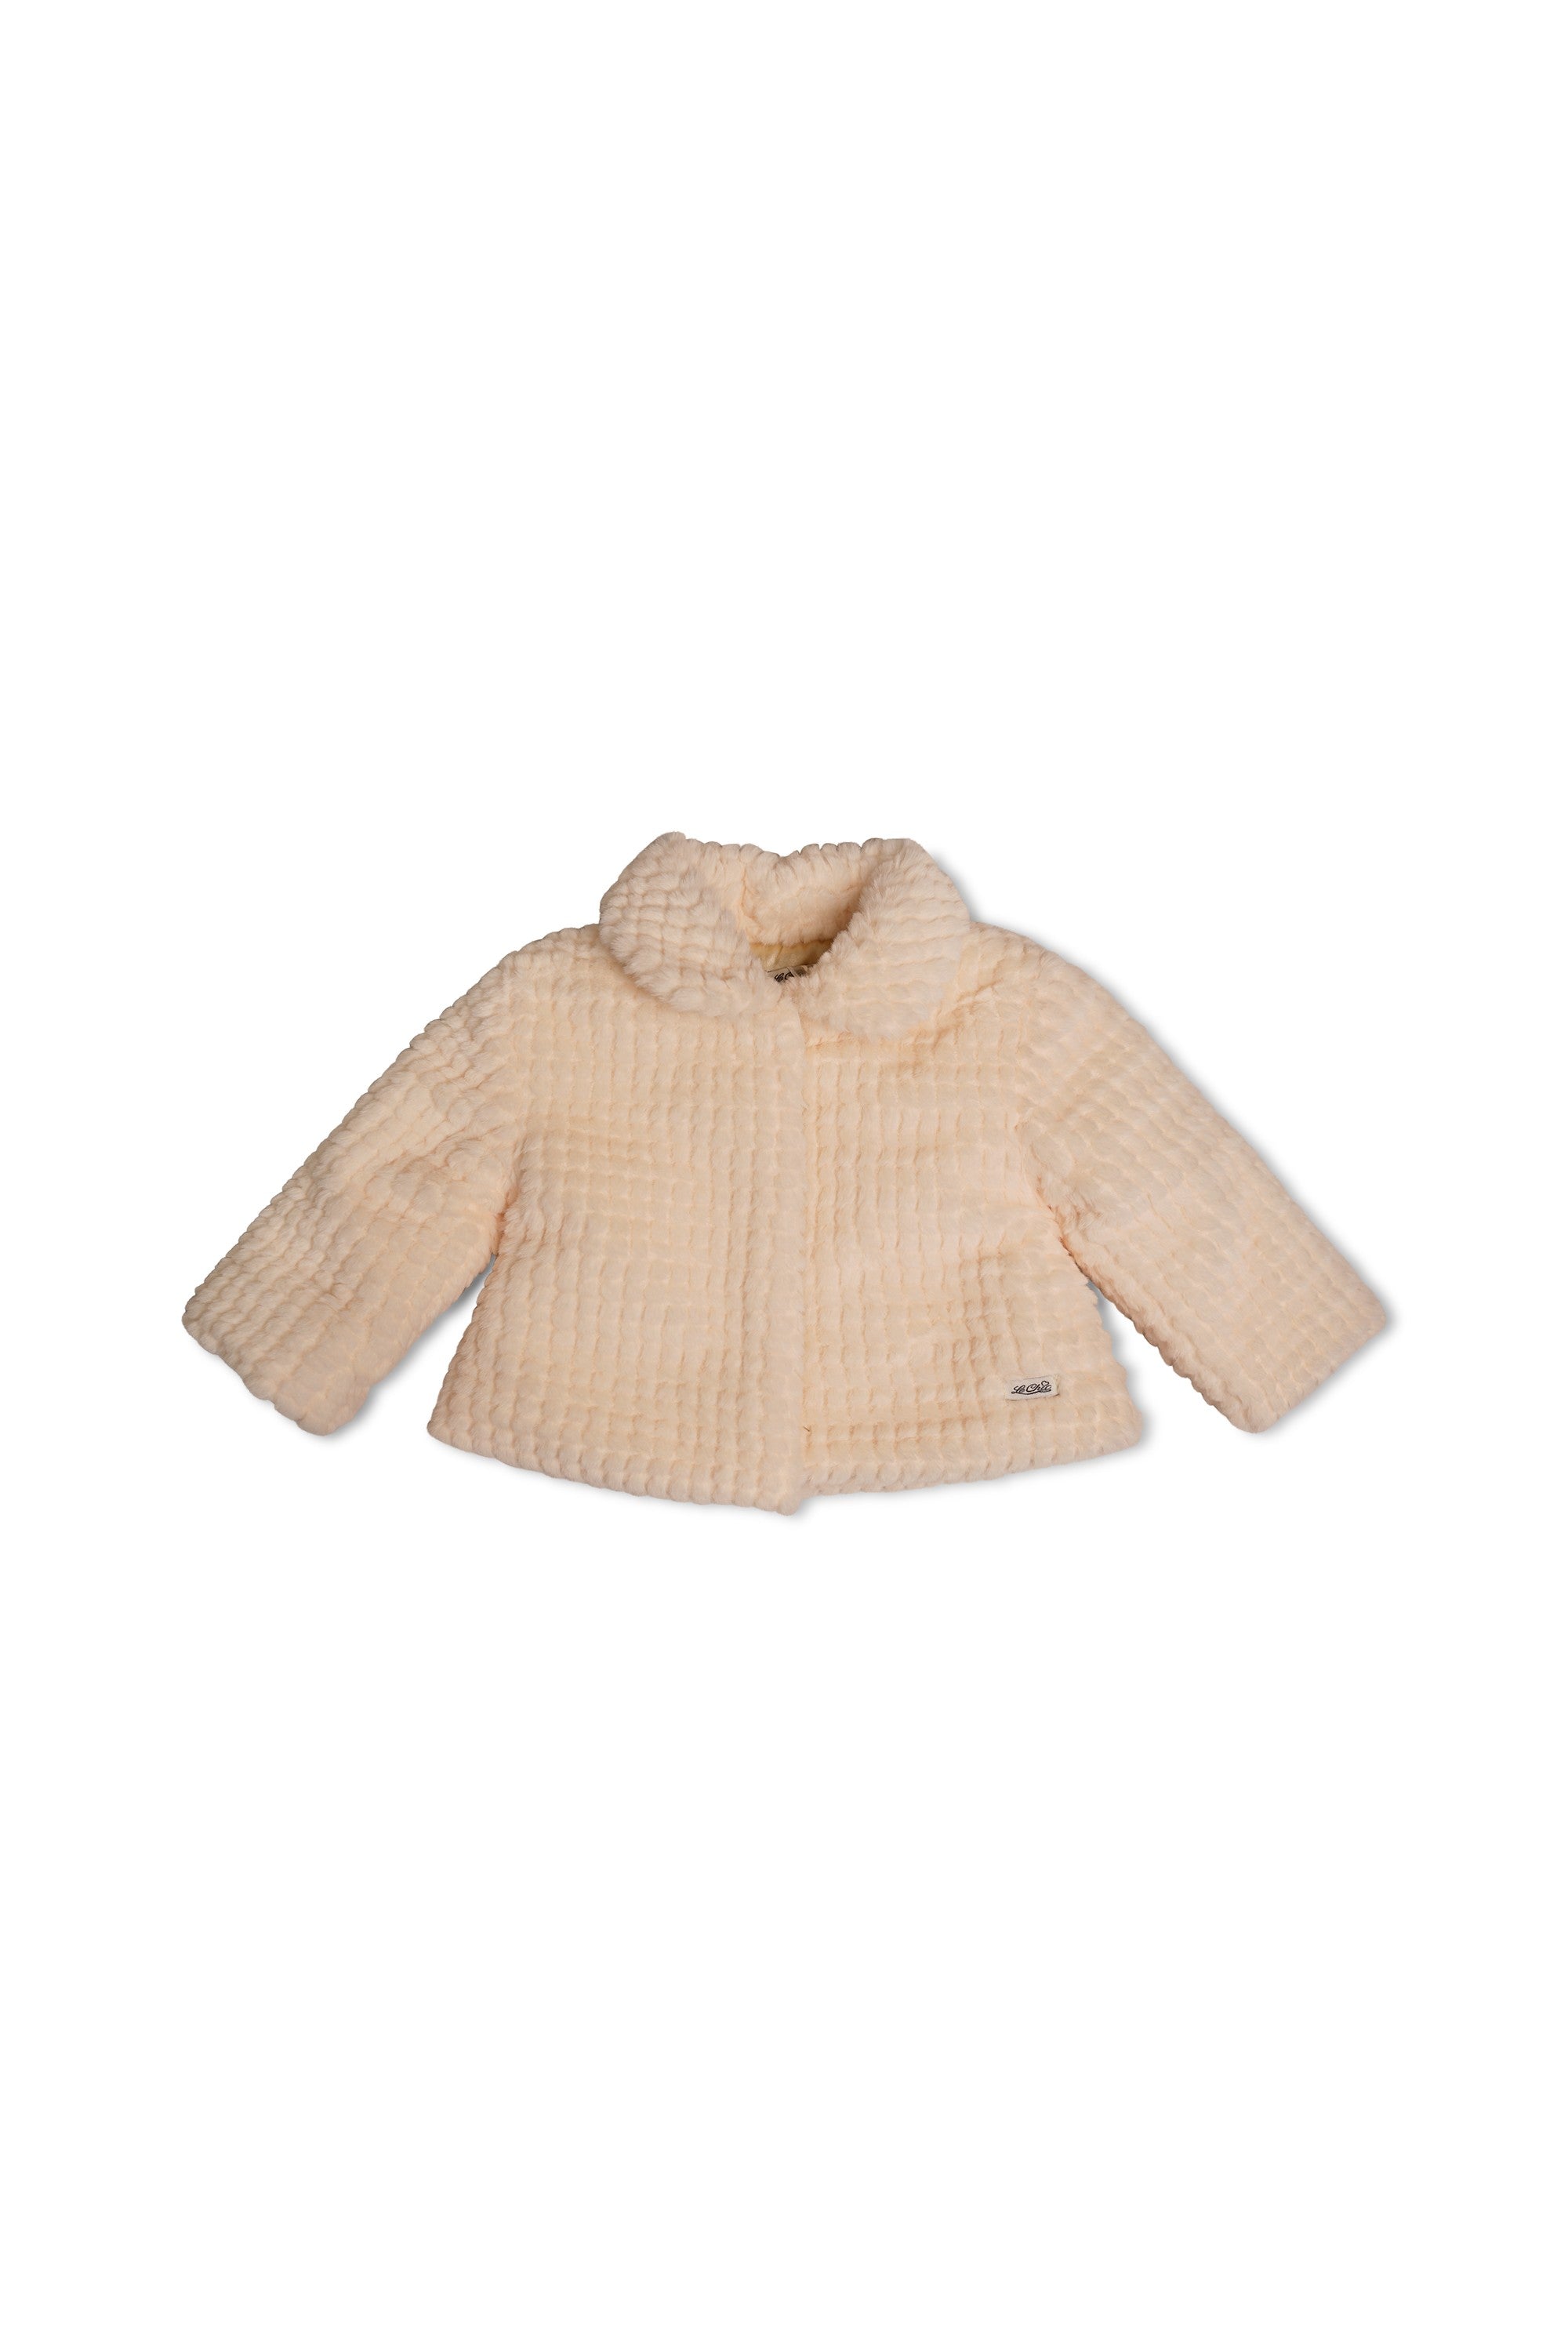 Baya Fur Baby Jacket - Pearled Ivory - Twinkle Twinkle Little One